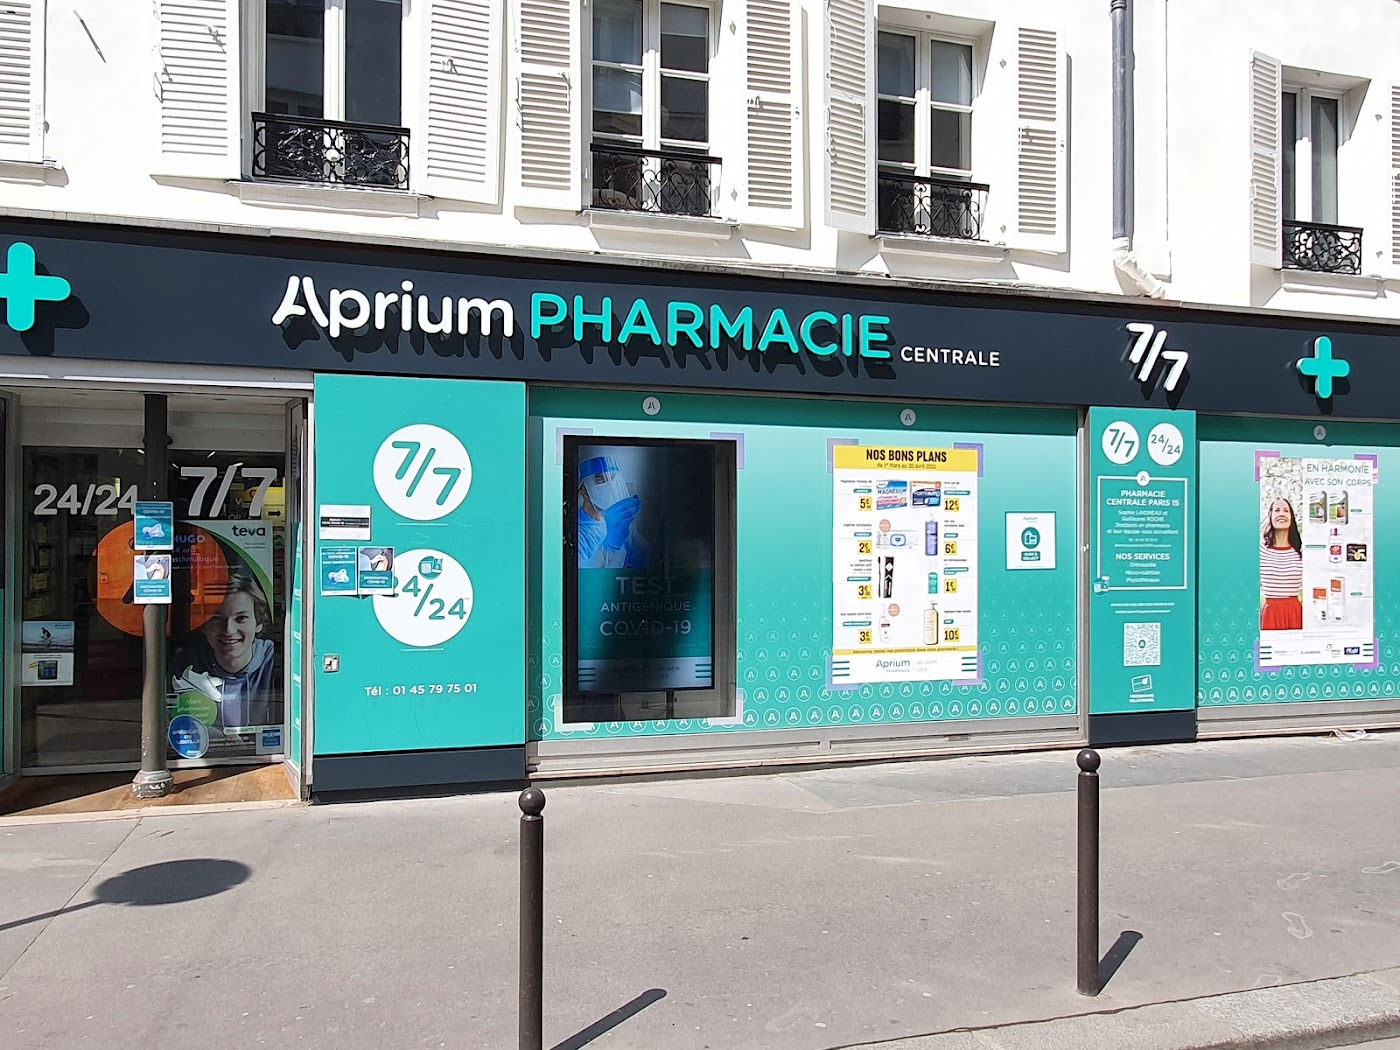 Aprium Pharmacie Centrale Paris 15